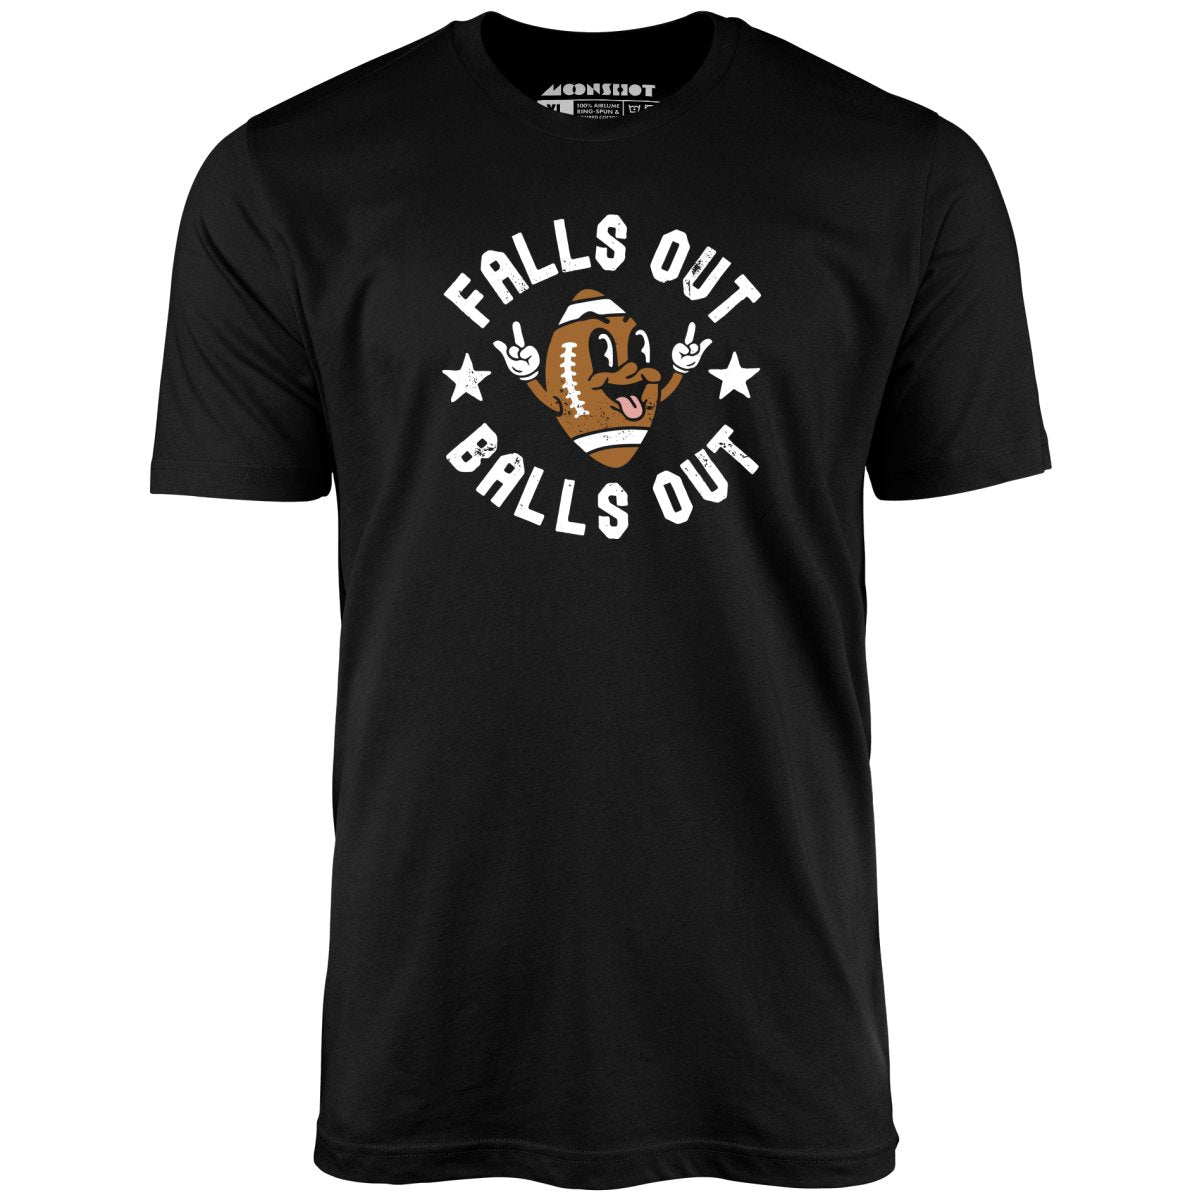 Falls Out Balls Out - Unisex T-Shirt